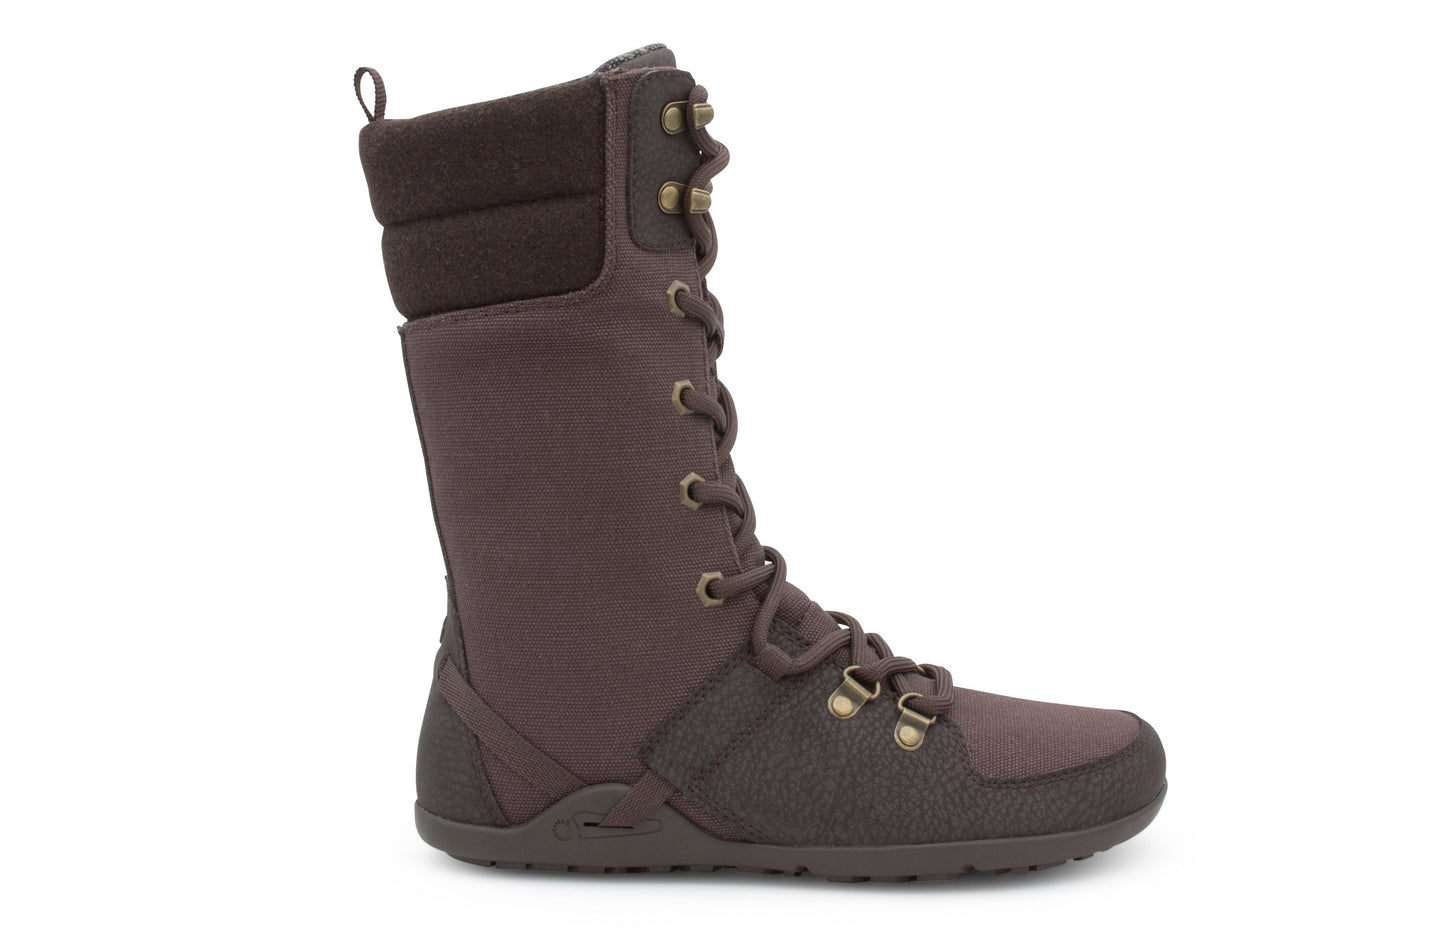 Xero Shoes Mika barfods vinterstøvler til kvinder i farven chocolate plum, yderside